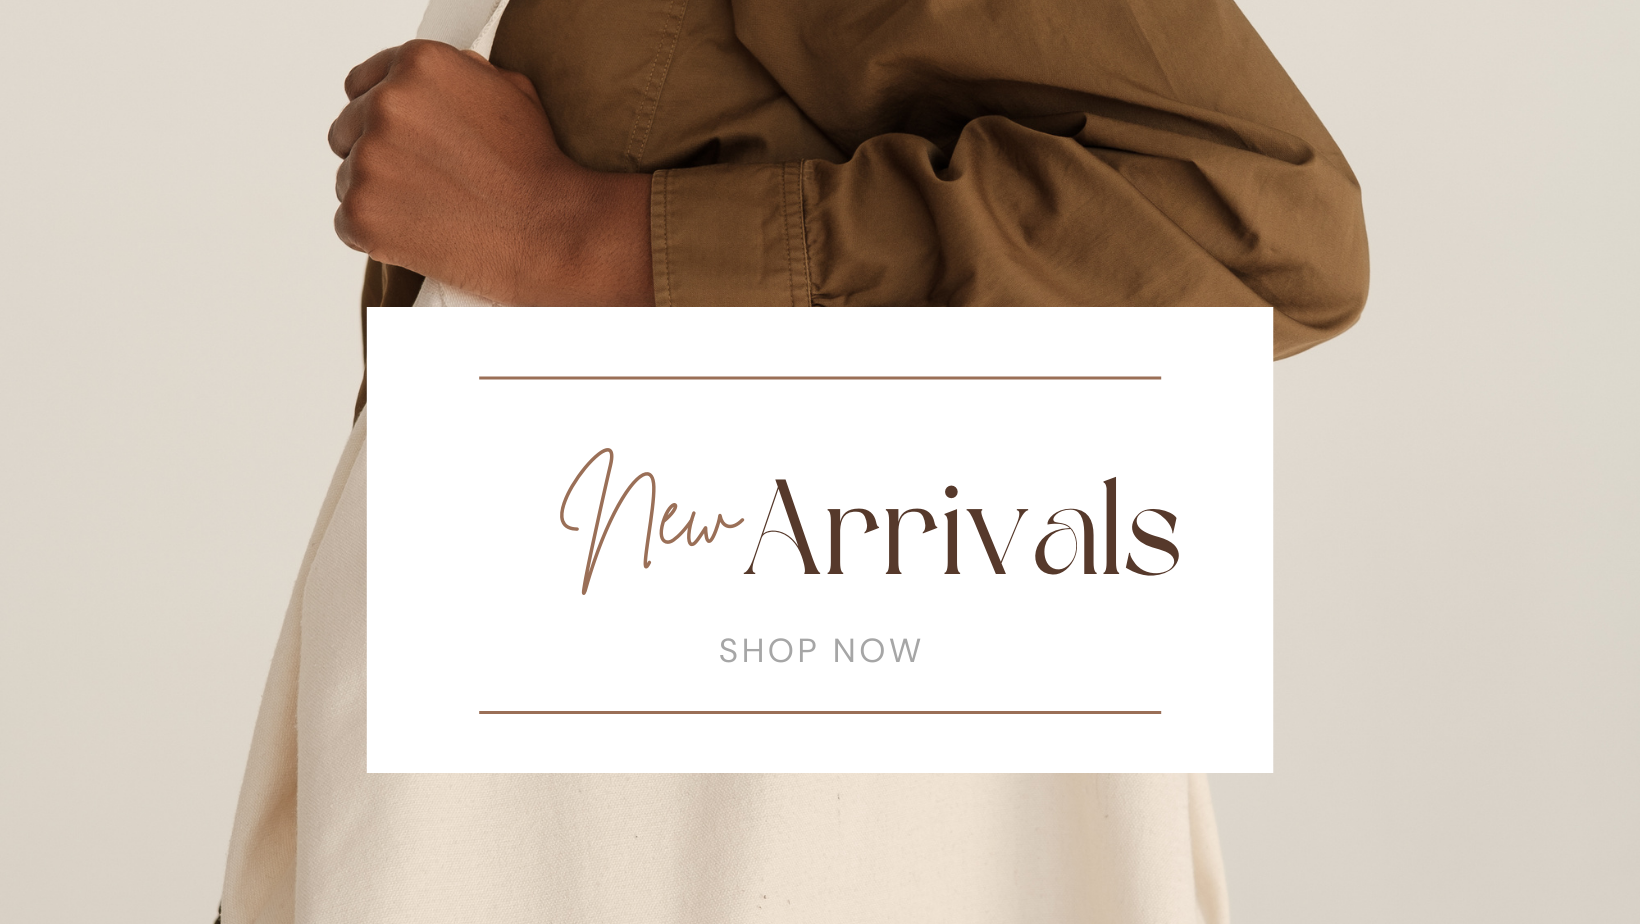 NEW ARRIVALS – Ori Clothing Boutique